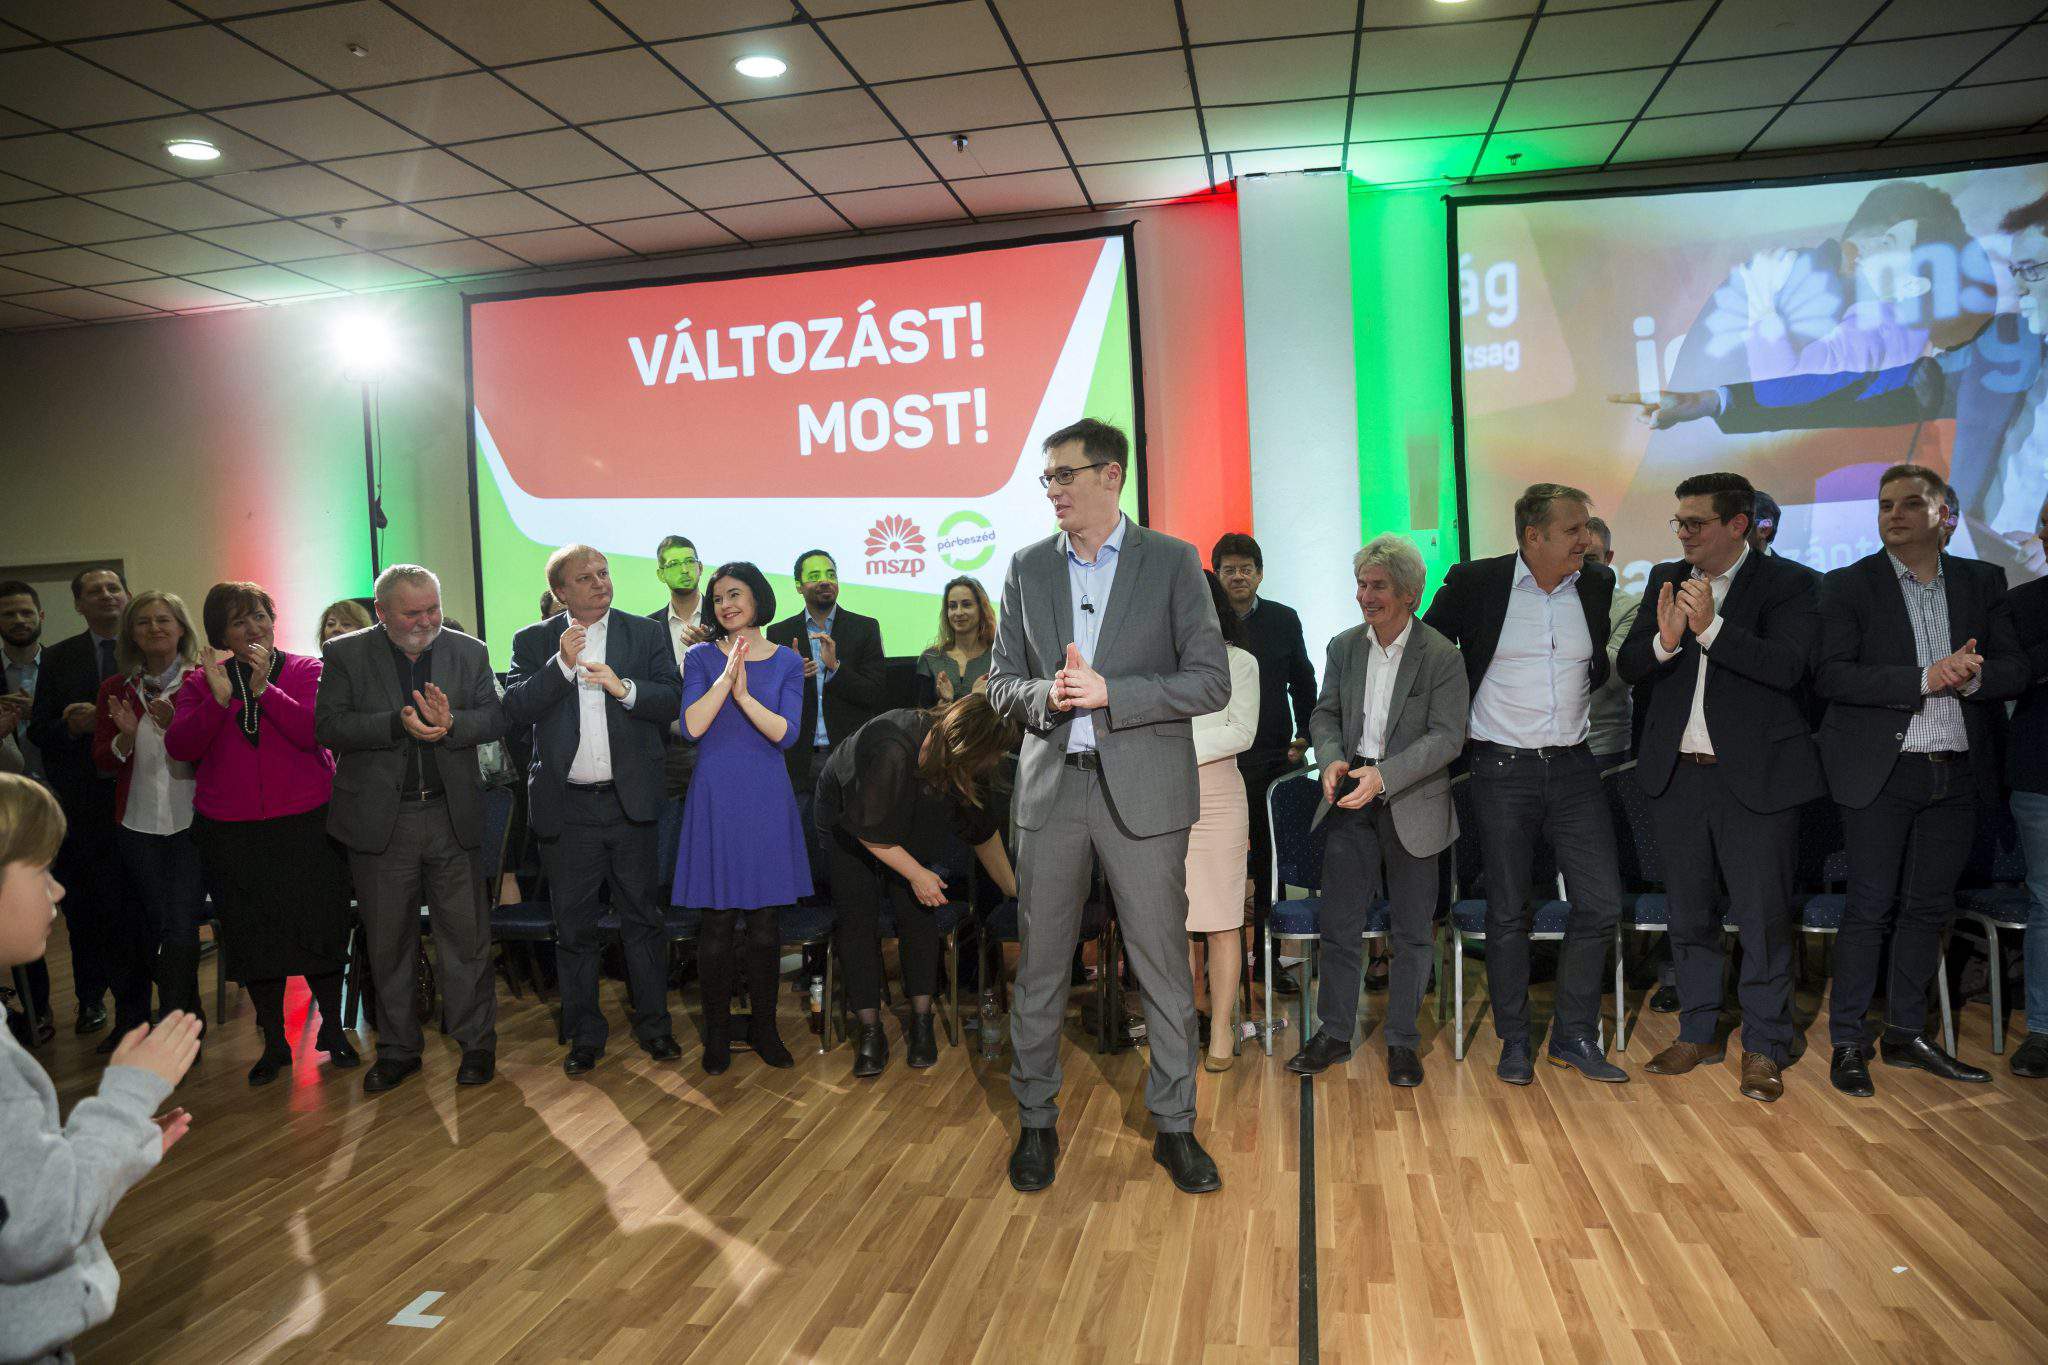 PM candidate Hungary leftist Karácsony